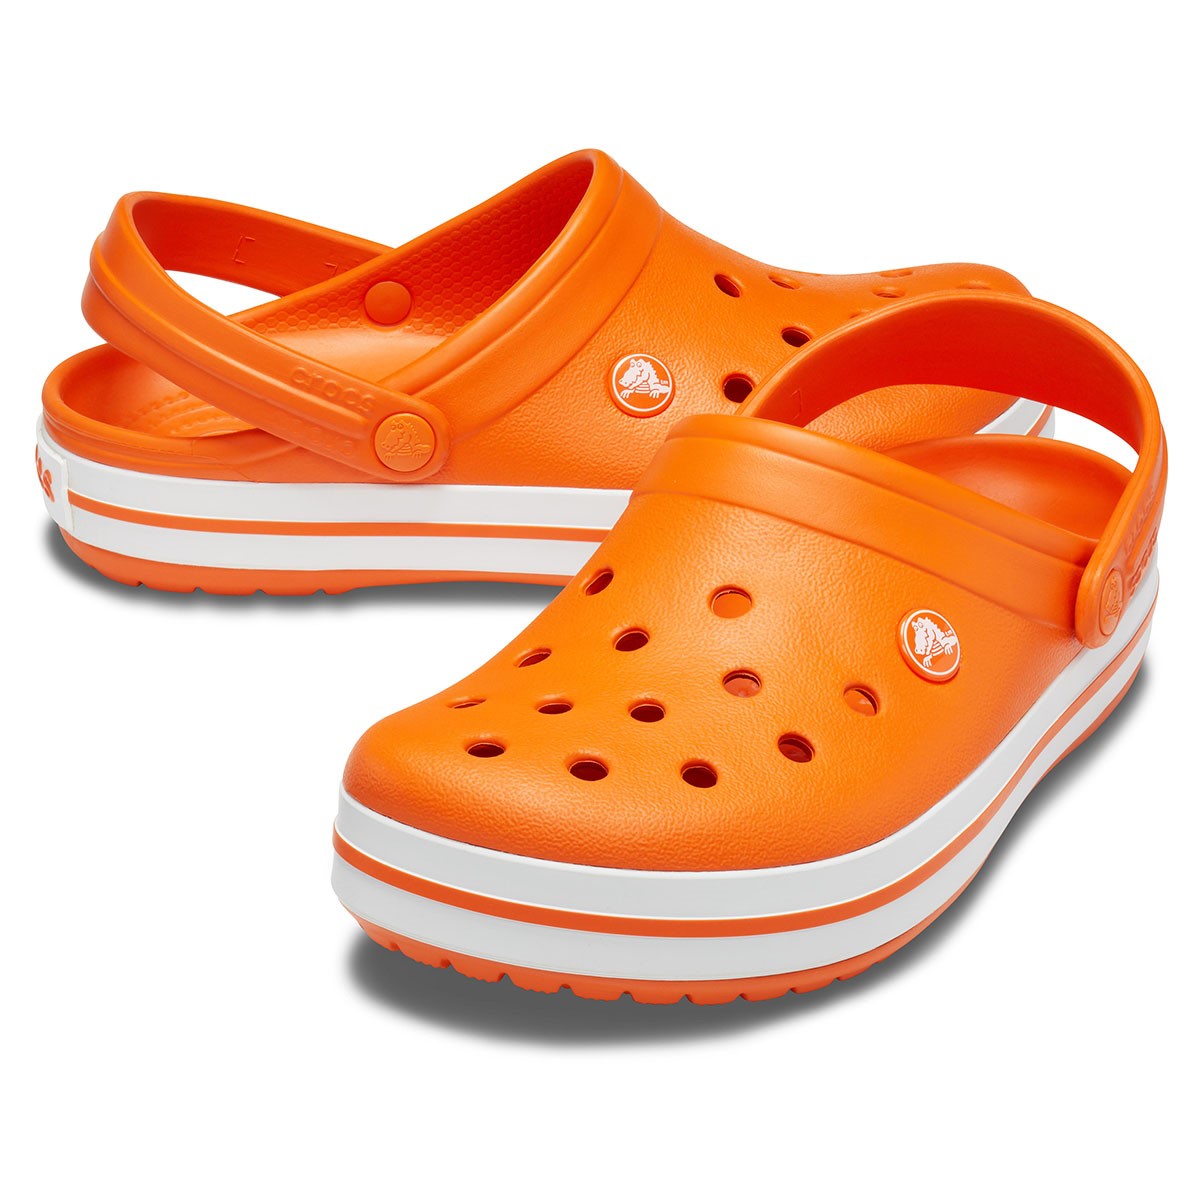 Crocs Unisex Sandalet 11016 Orange/White